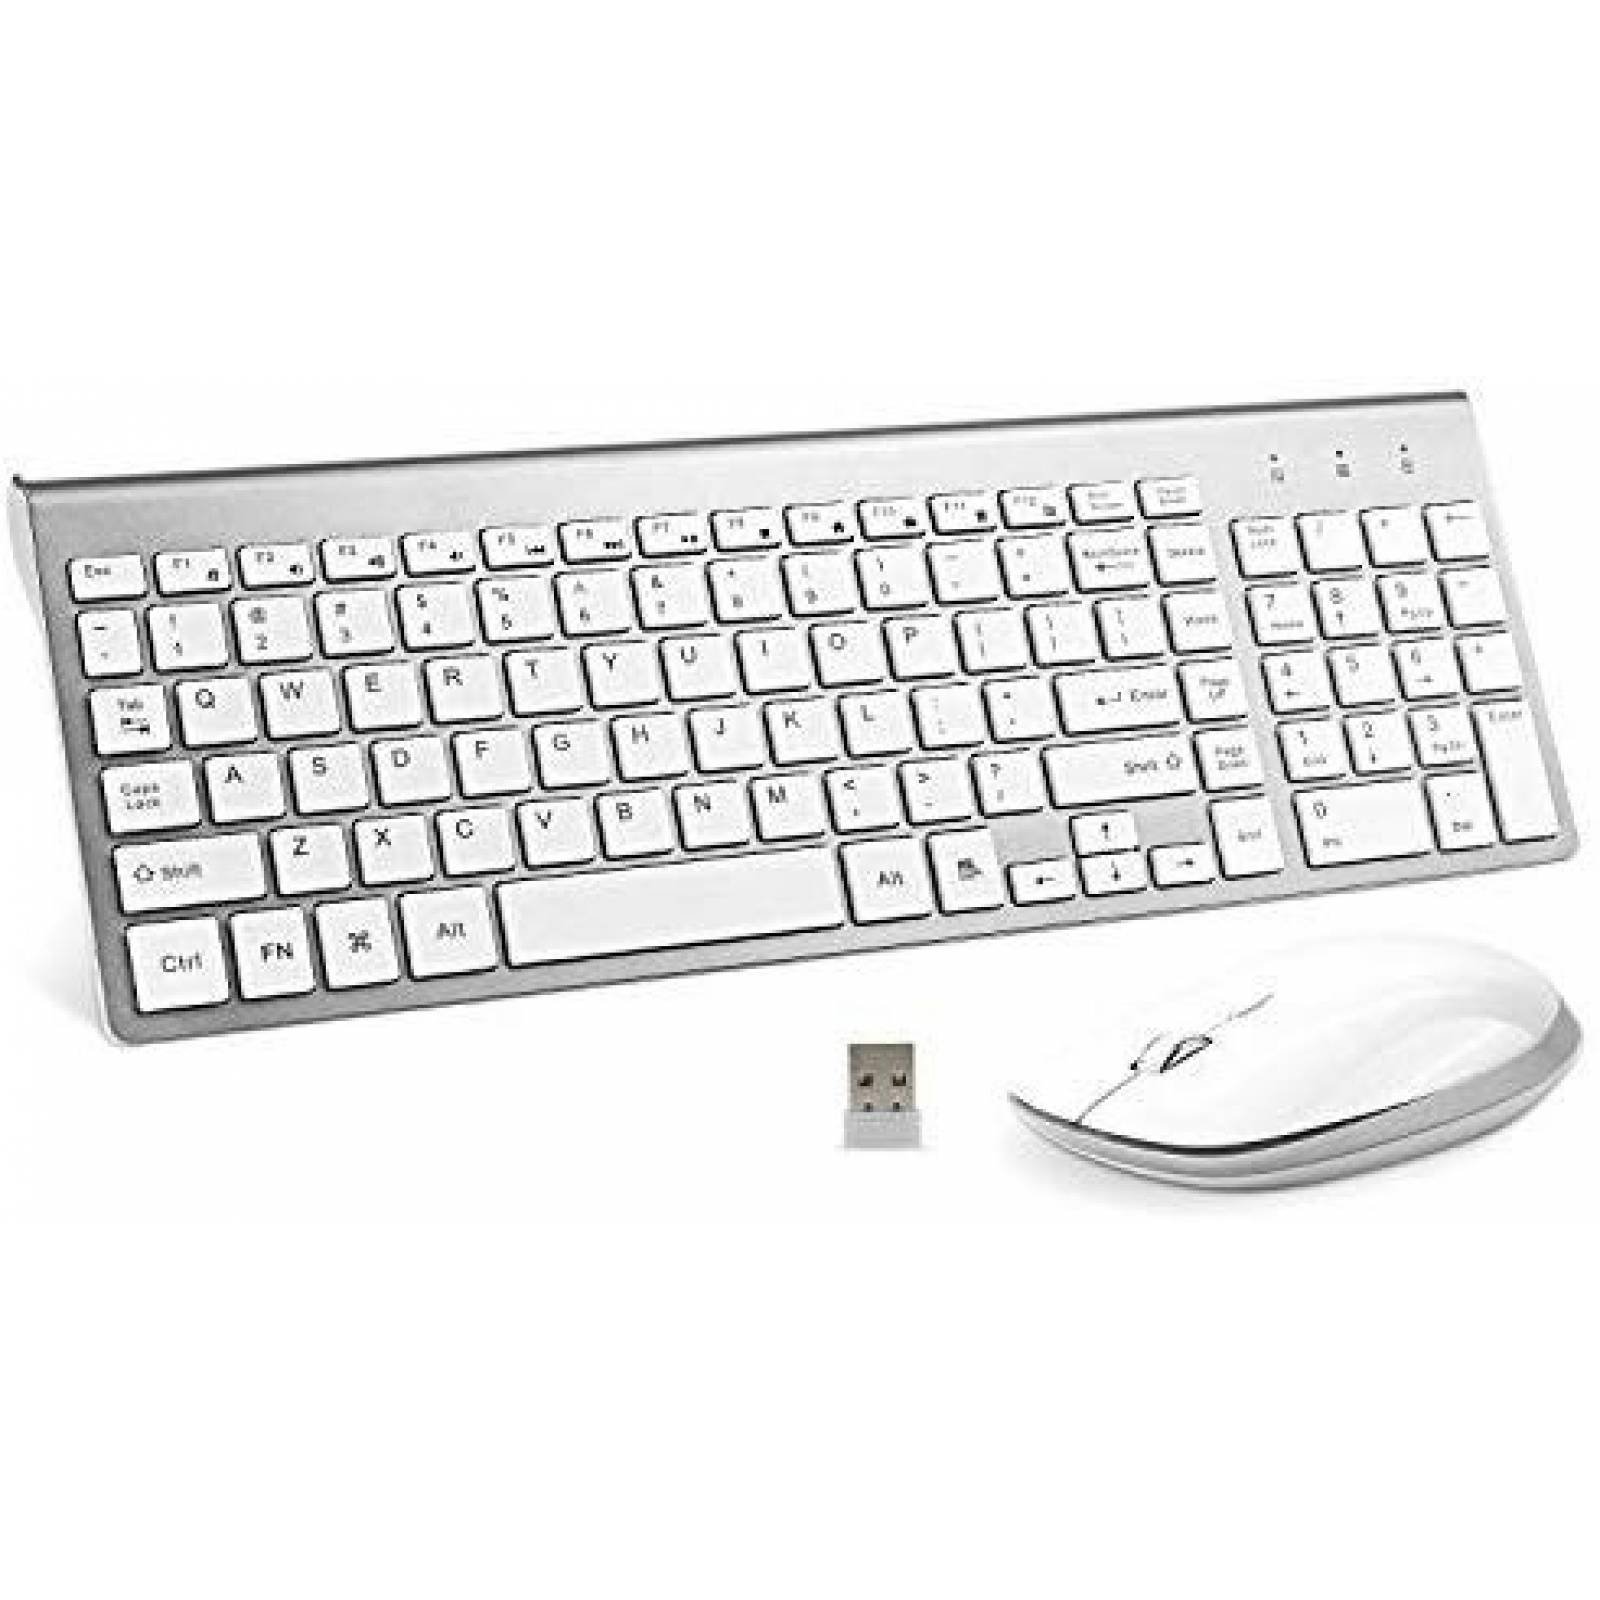 Teclado y Mouse FENIFOX Inalámbrico USB -Silver White